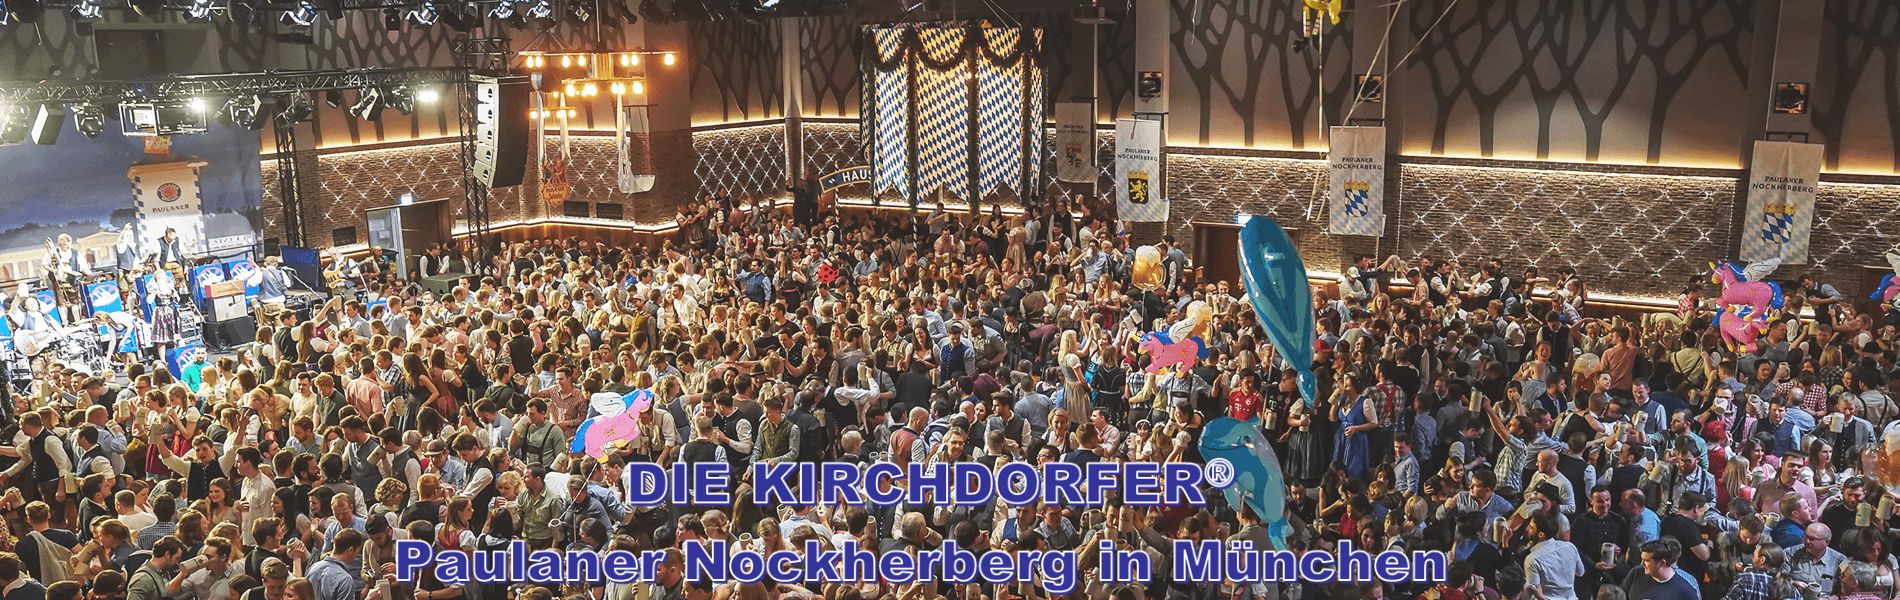 Oktoberfestkapelle Die Kirchdorfer® - Oktoberfestband - Oktoberfestband Munich - The KIRCHDORFER®